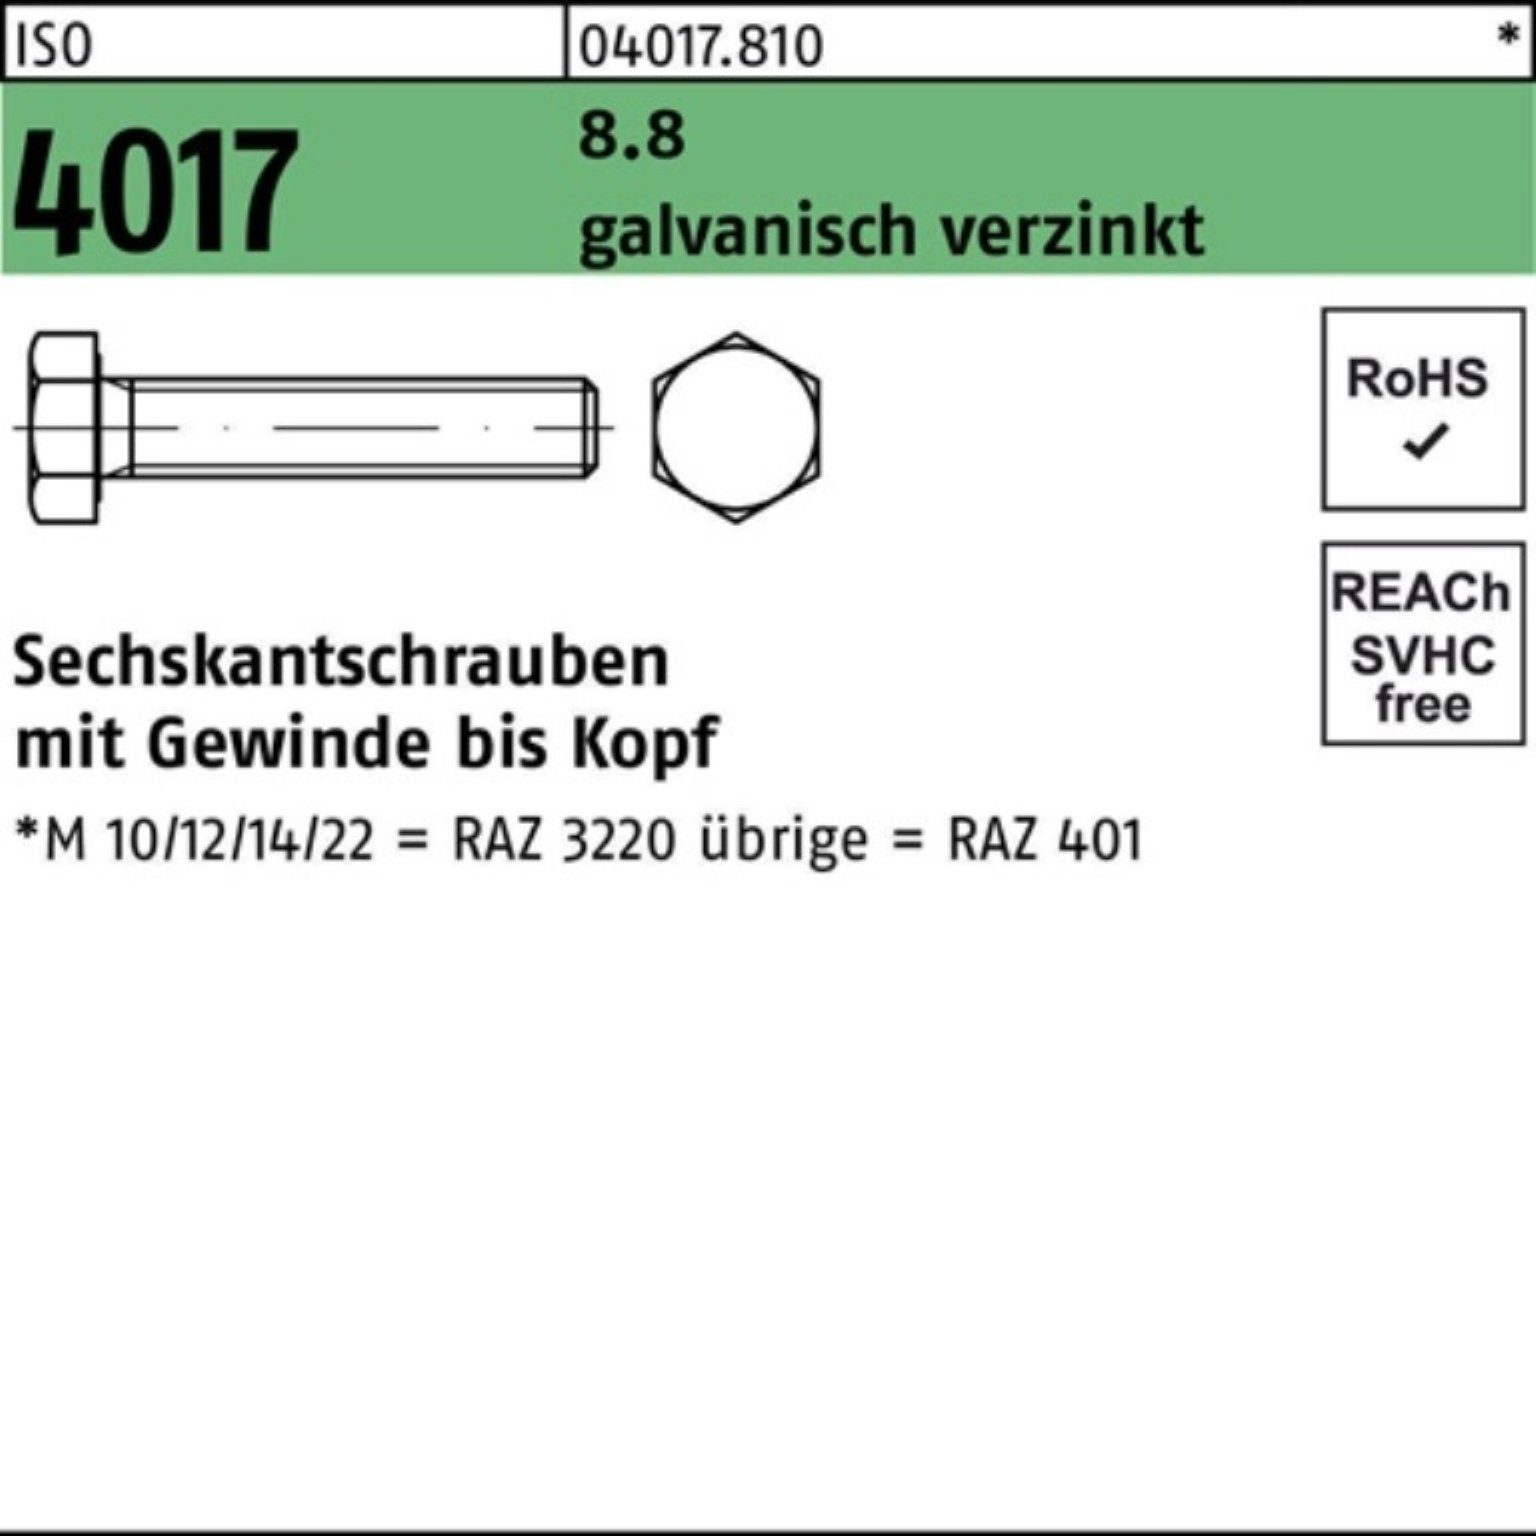 Bufab Sechskantschraube 100er Pack Sechskantschraube VG M33x 1 4017 ISO galv.verz. St 8.8 120